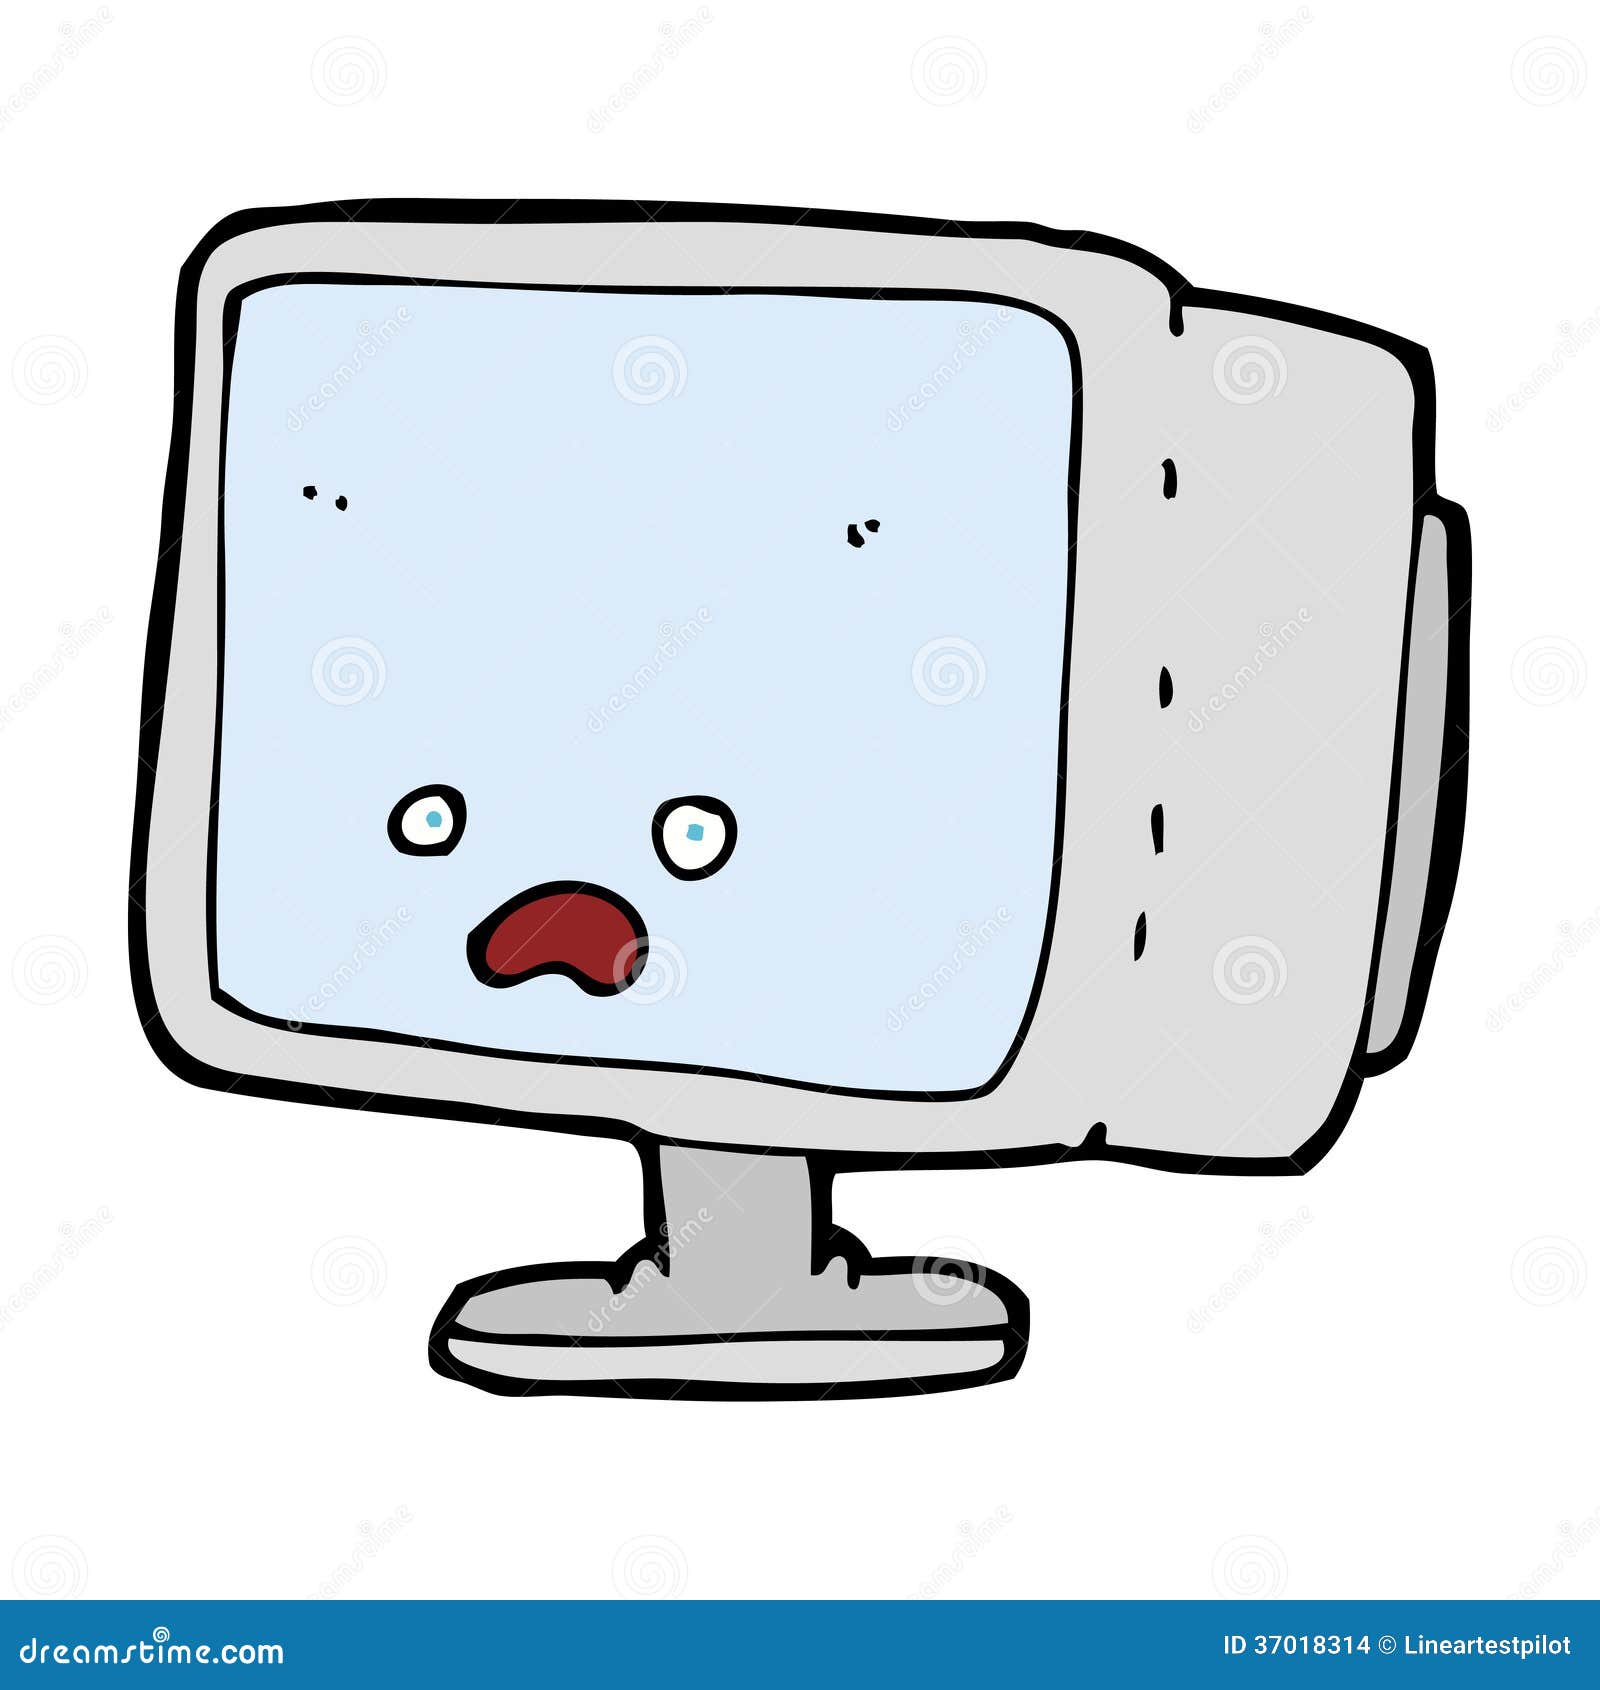 Cartoon Computer Screen Stock Images - Image: 37018314